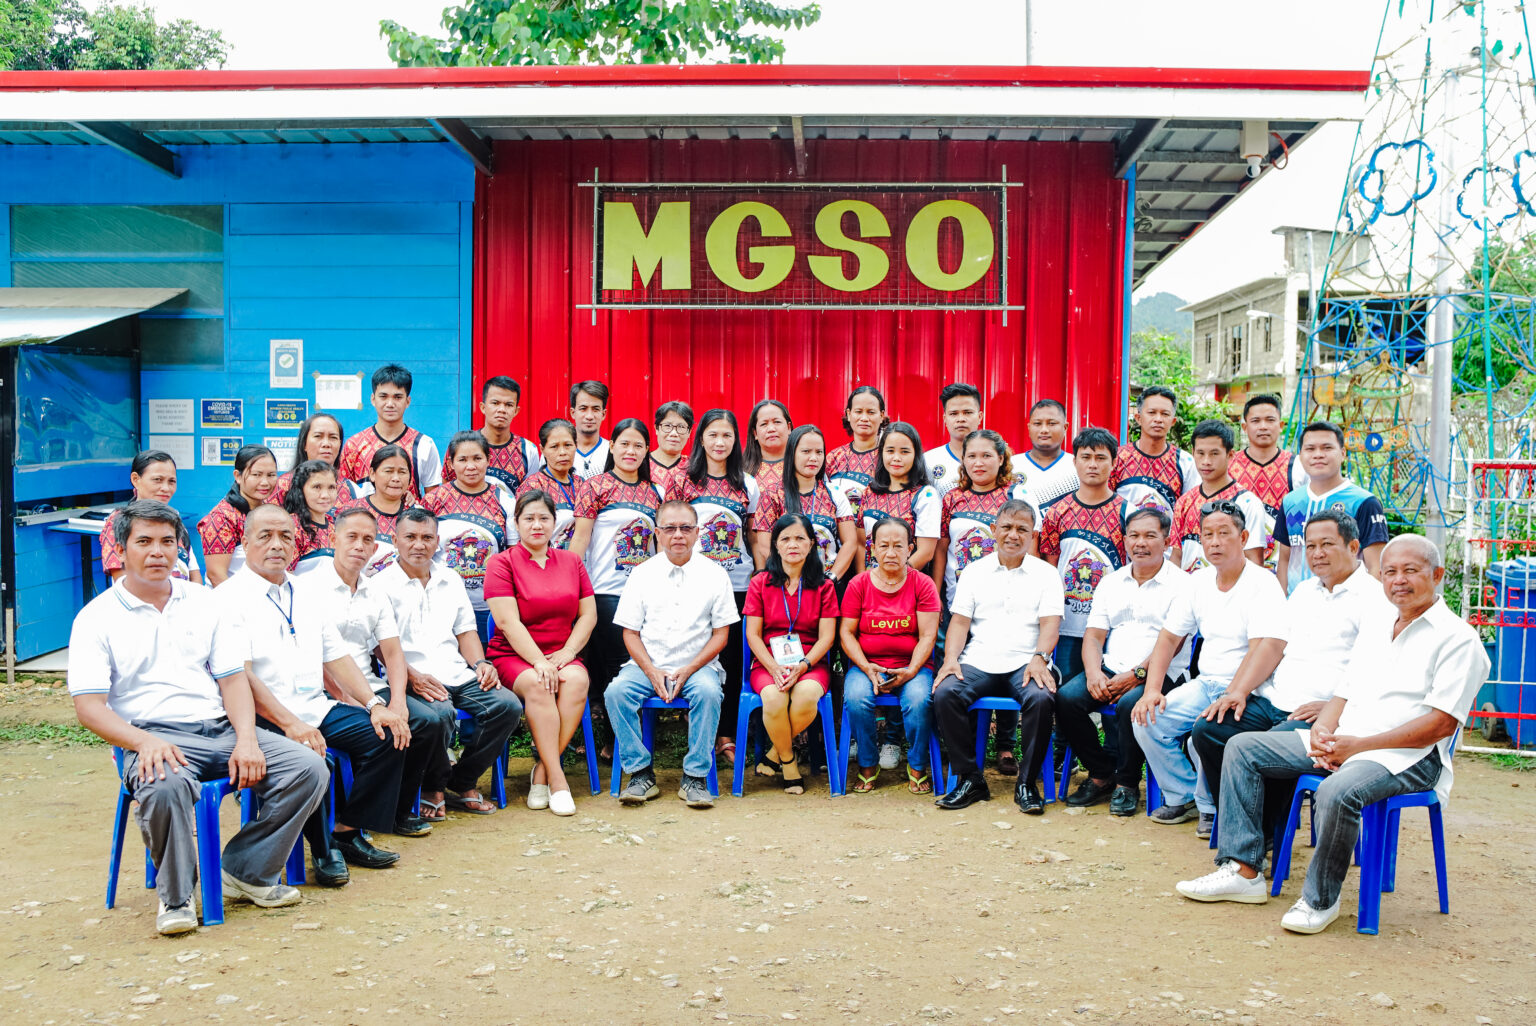 mgso_group1